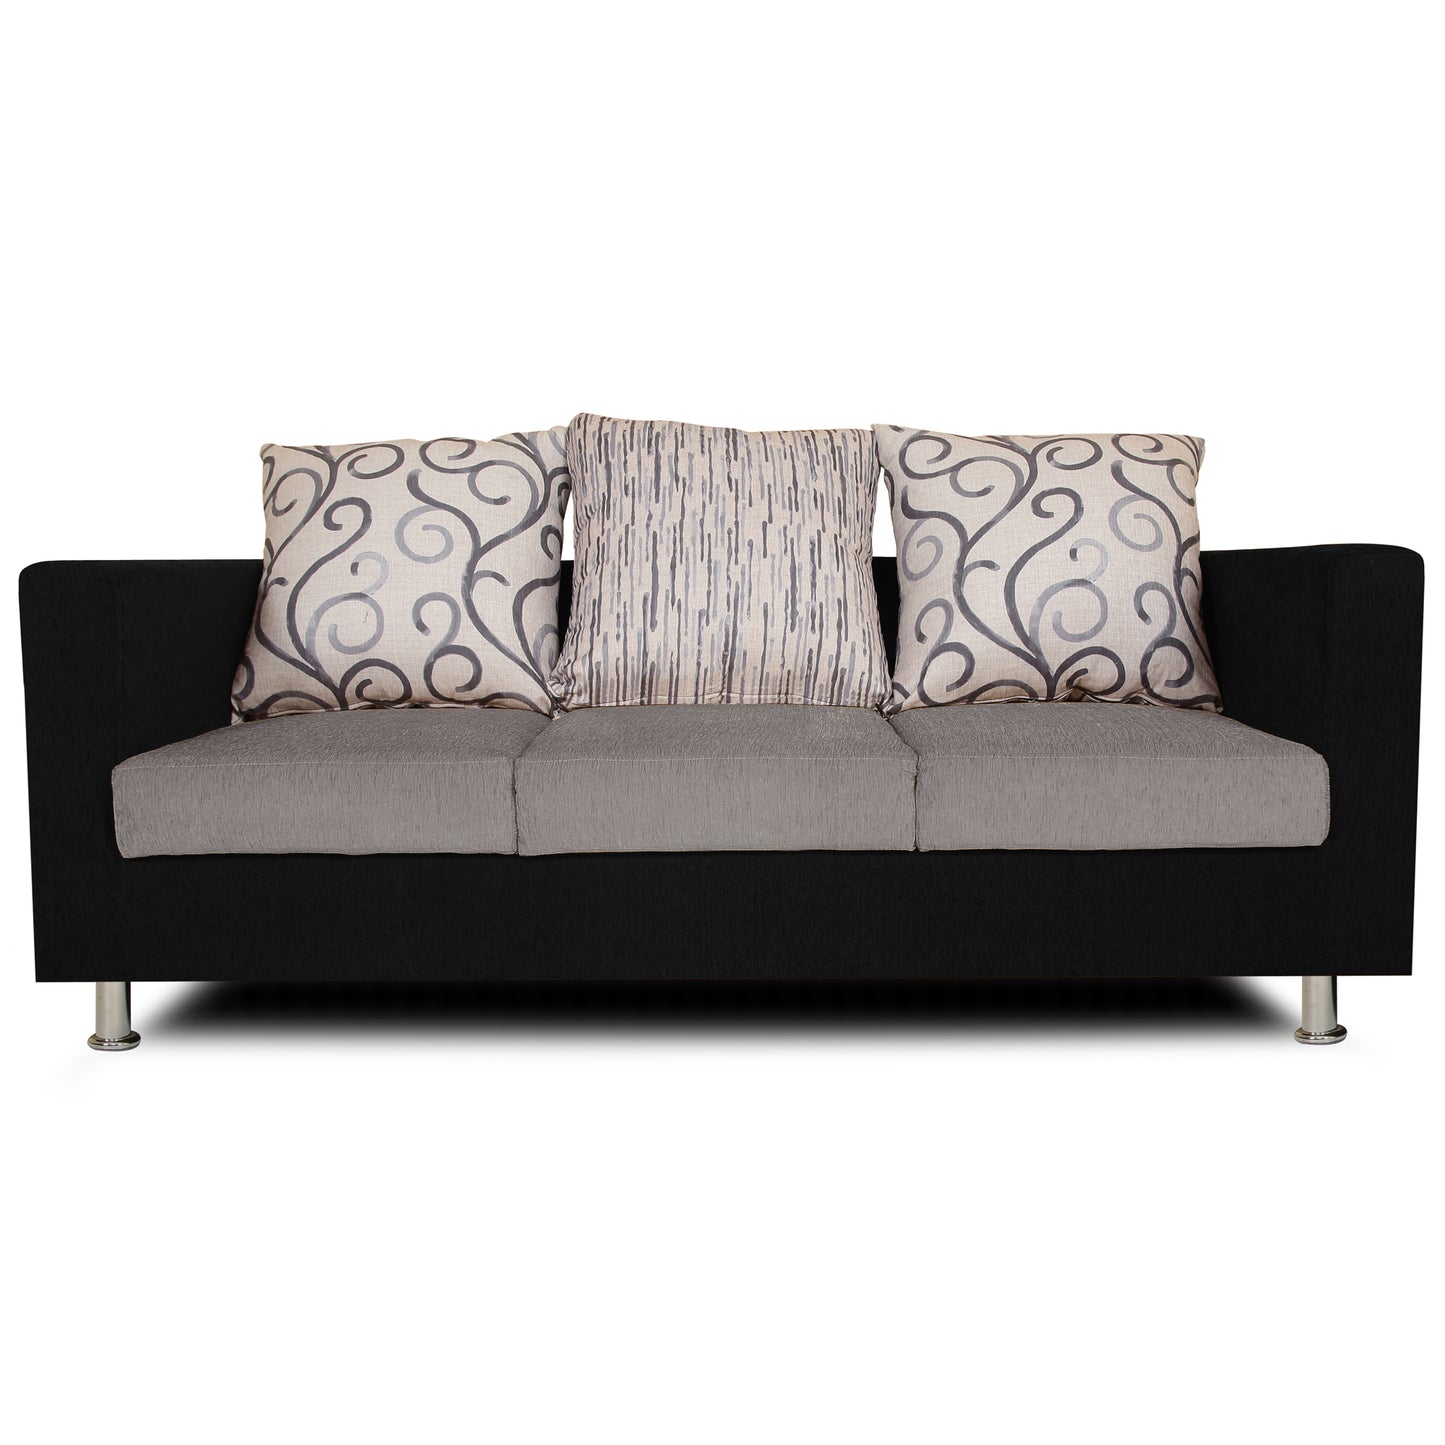 Adorn India Dexter 3 Seater Sofa Digitel Print (Grey & Black)